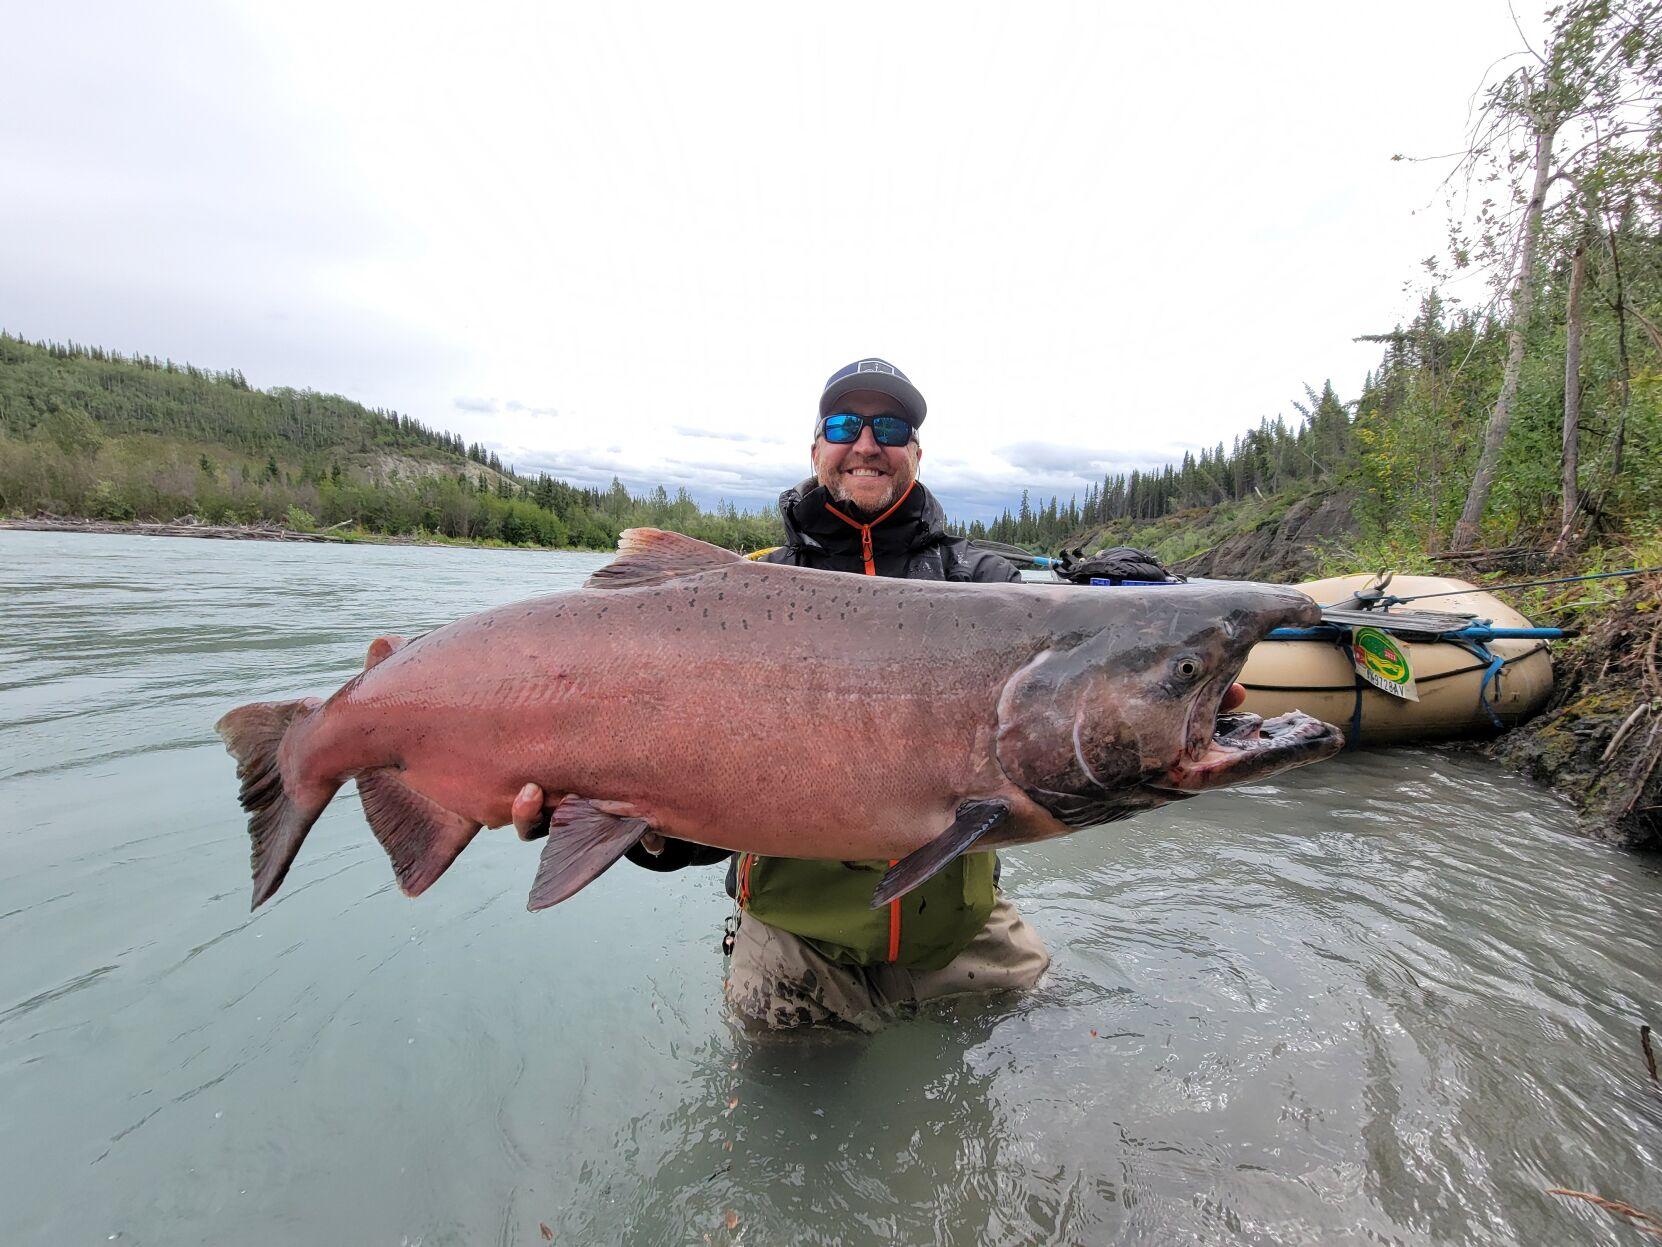 Mackenthun: Alaskan river fishing provides great challenge